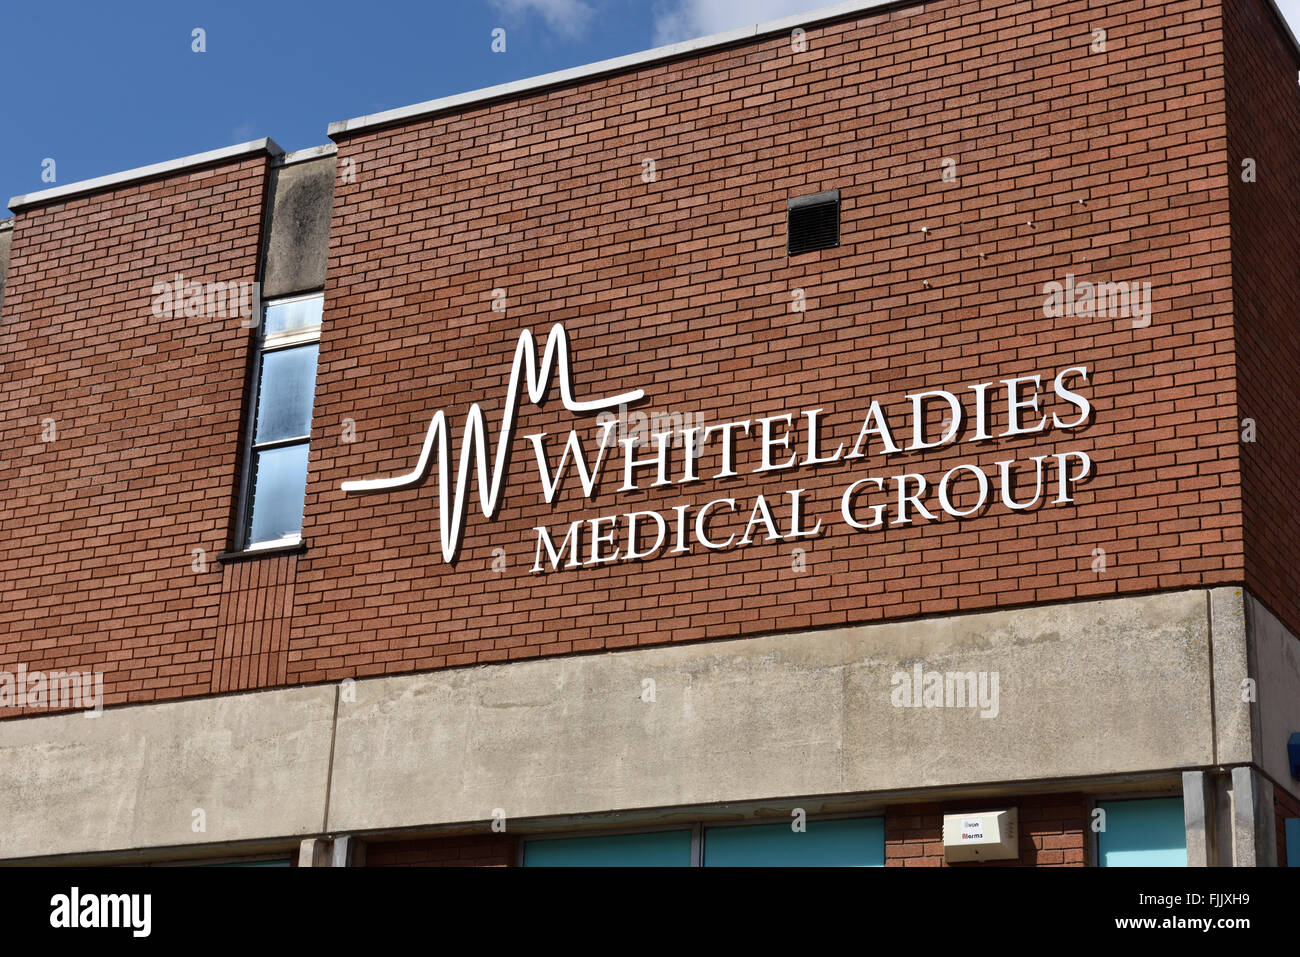 NHS Whiteladies Medical Group prácticas GP firmar en fachada, Bristol, Reino Unido Foto de stock